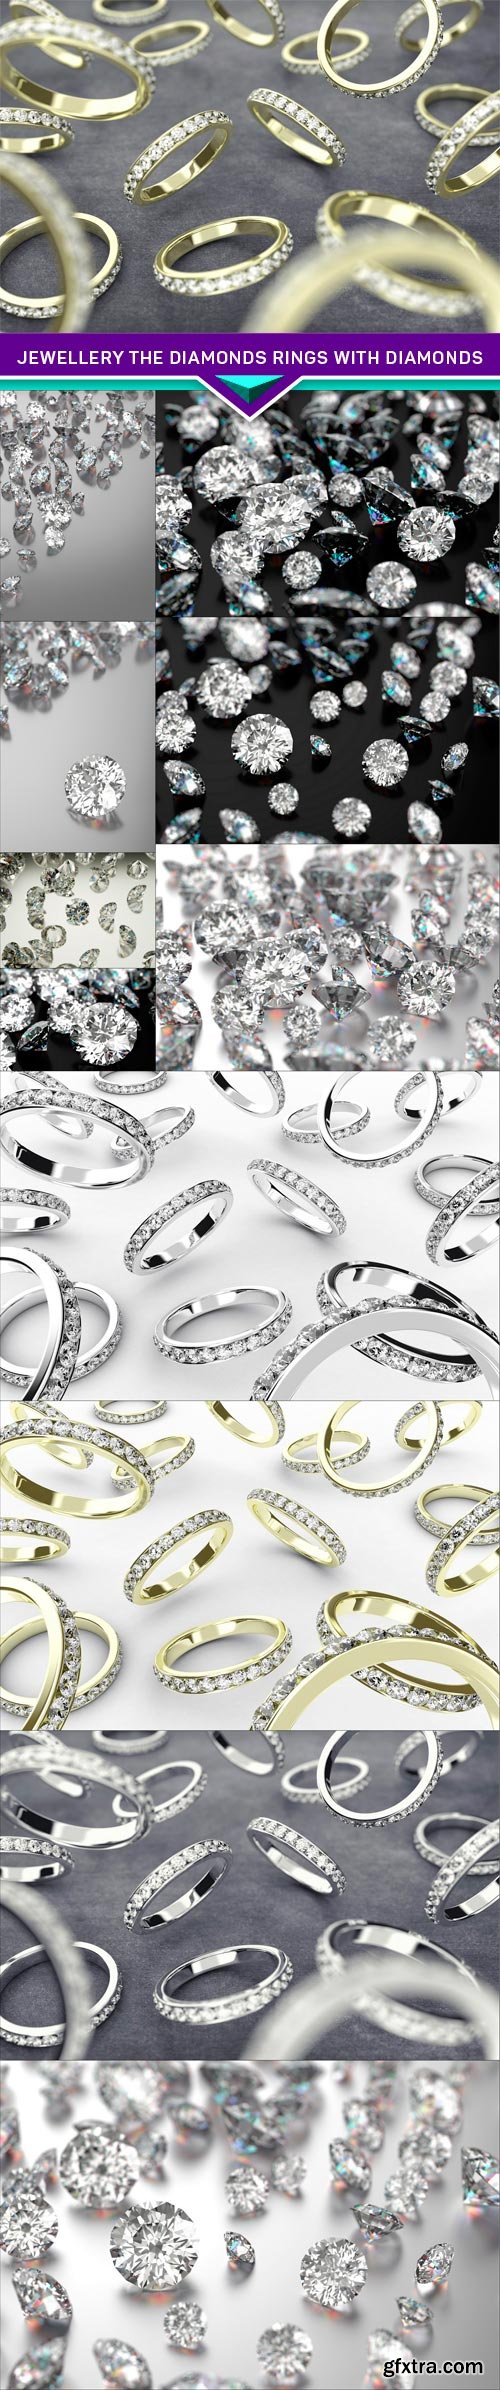 Jewellery the diamonds rings with diamonds 12x JPEG